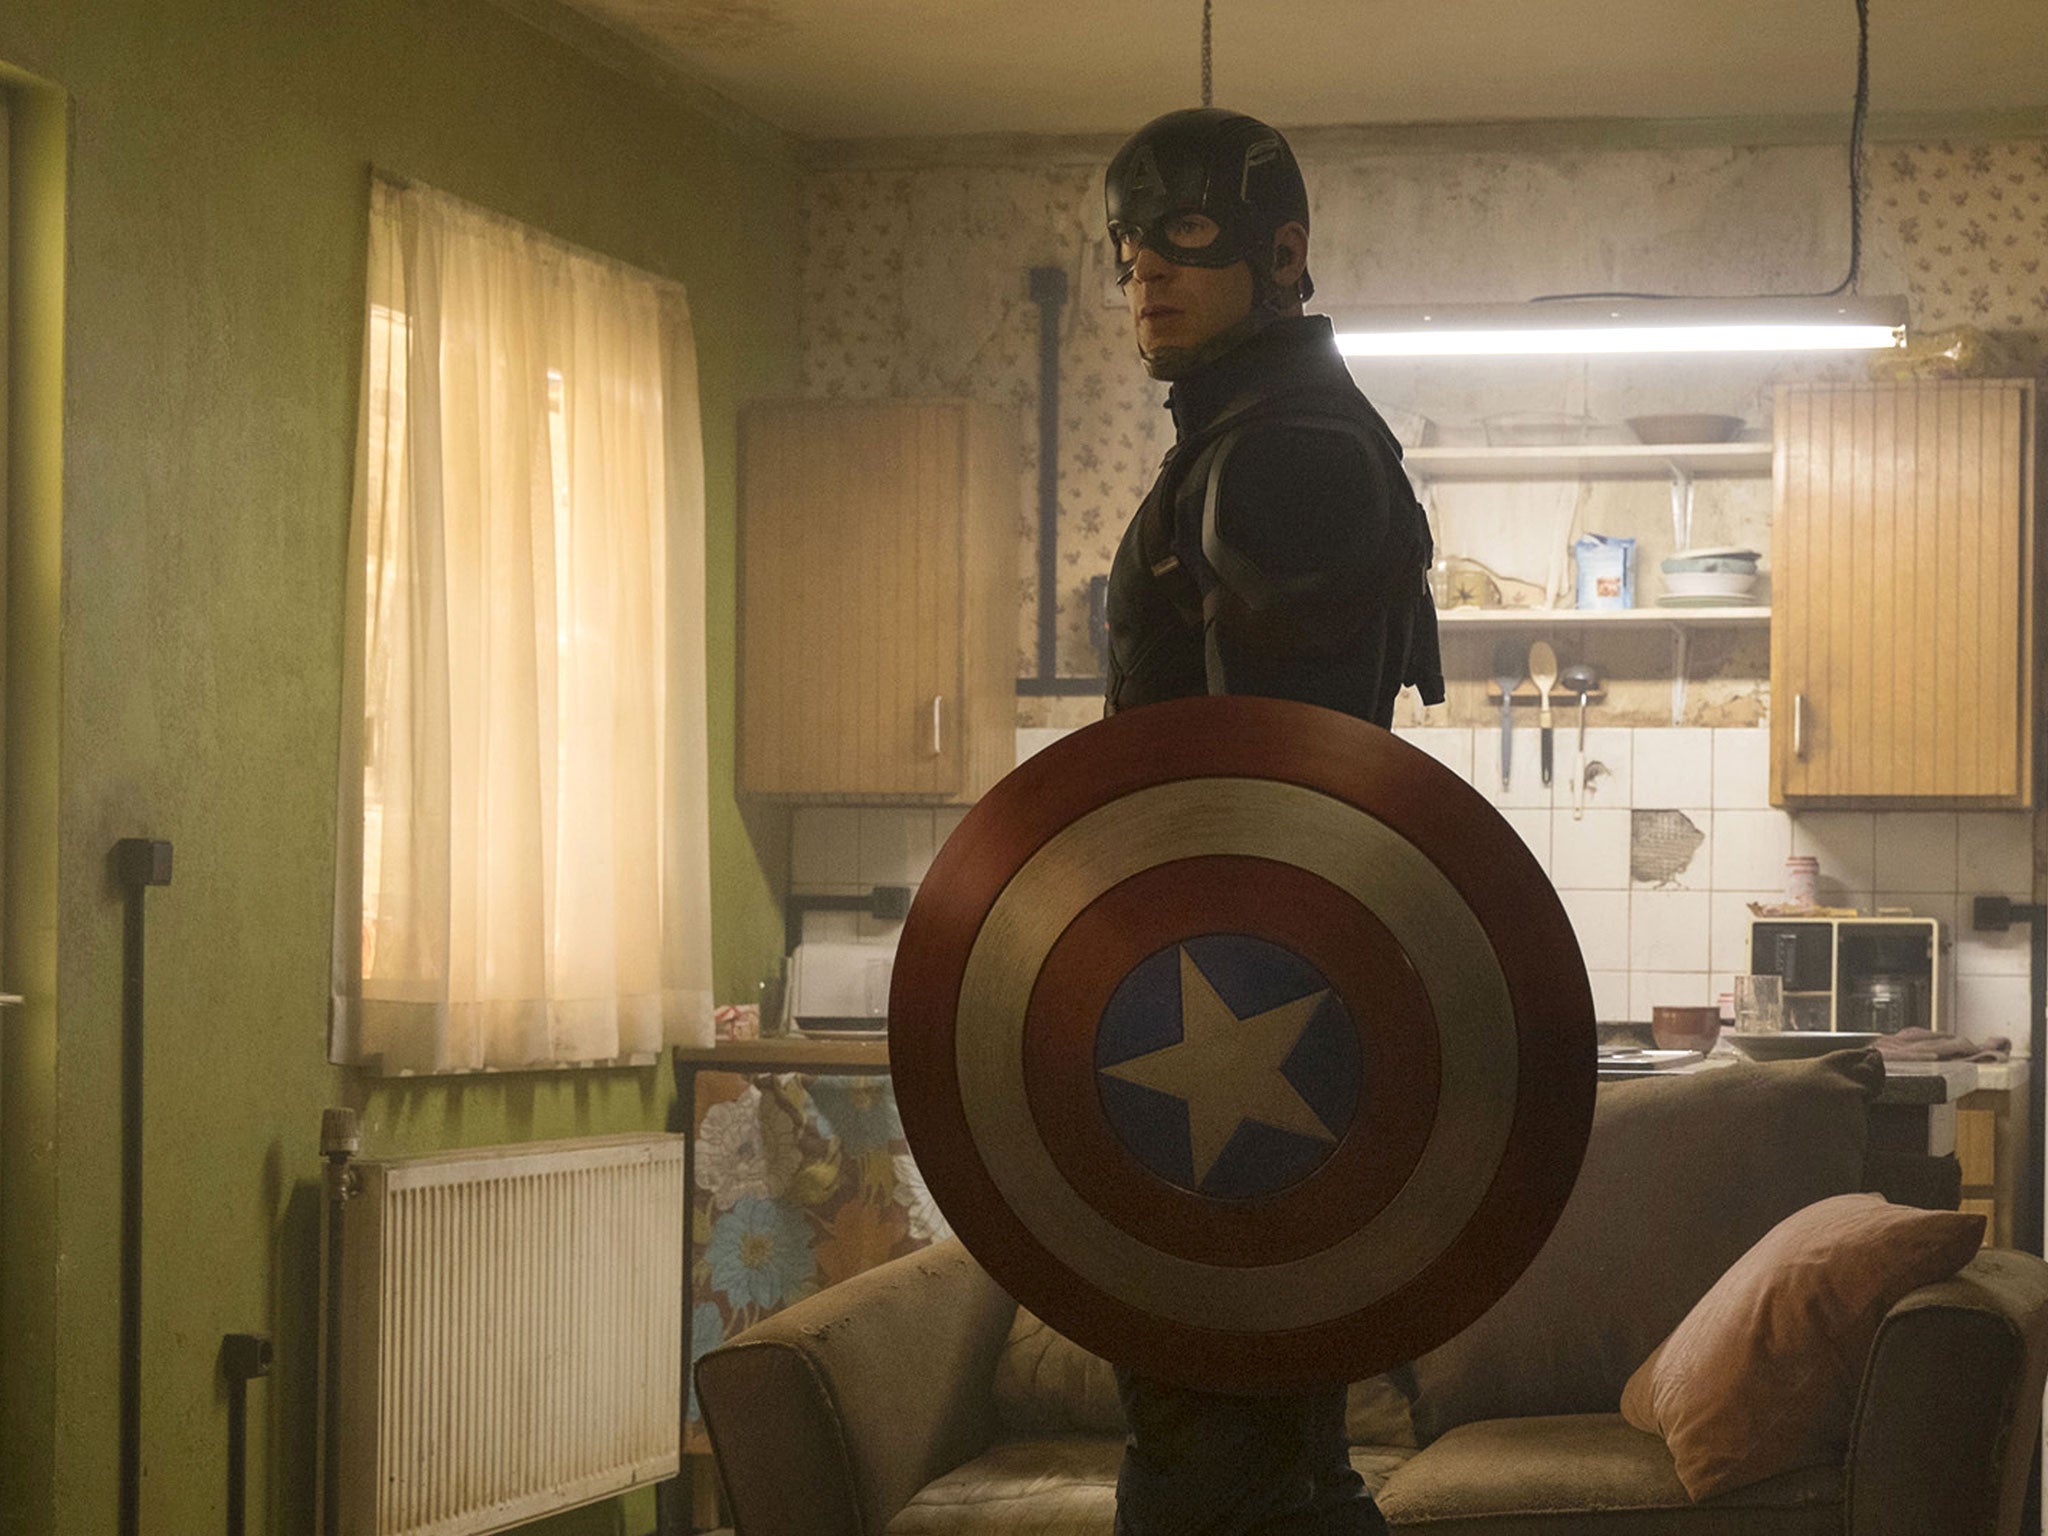 Chris Evans as Captain America, his seventh appearance as the superhero